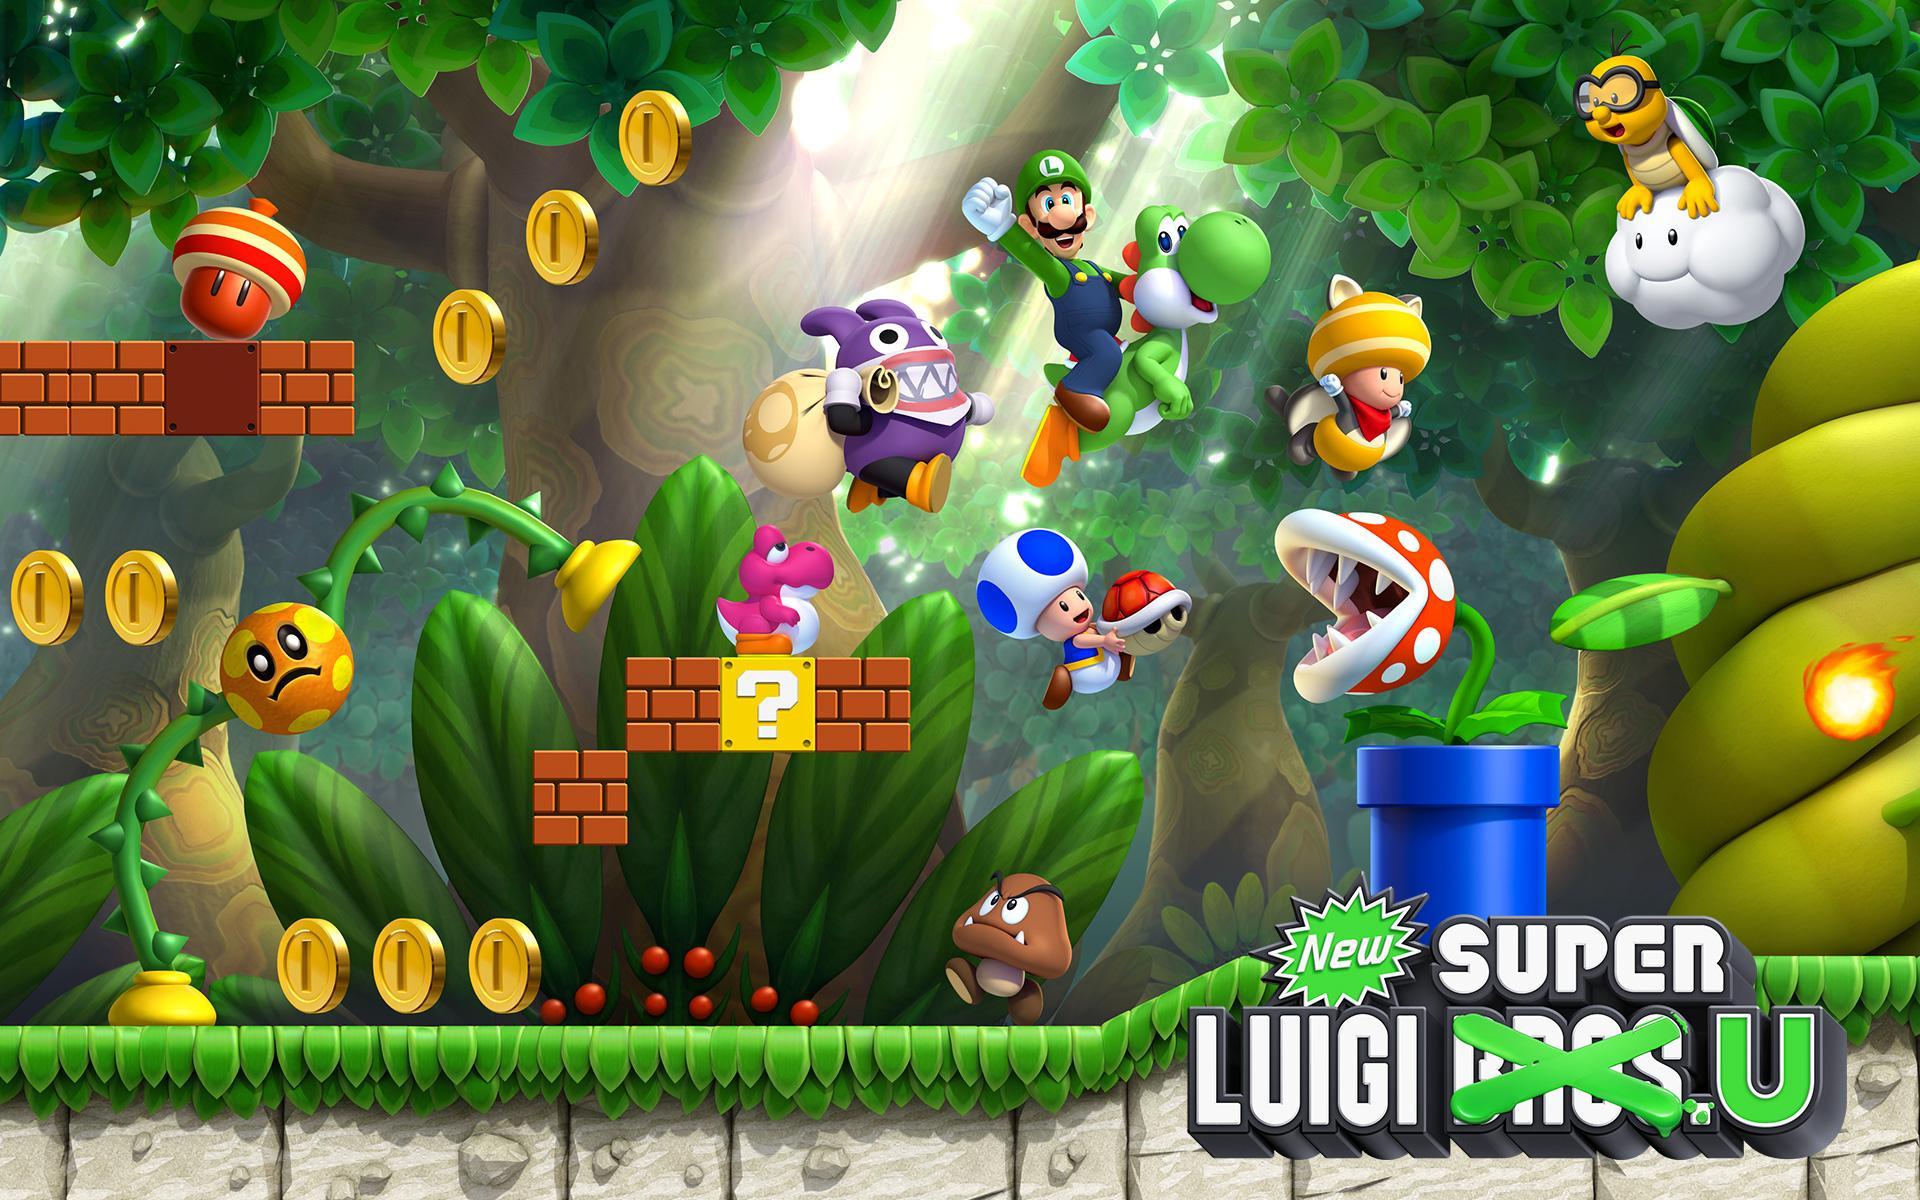 HD desktop wallpaper: Video Game, New Super Mario Bros download free  picture #1462693